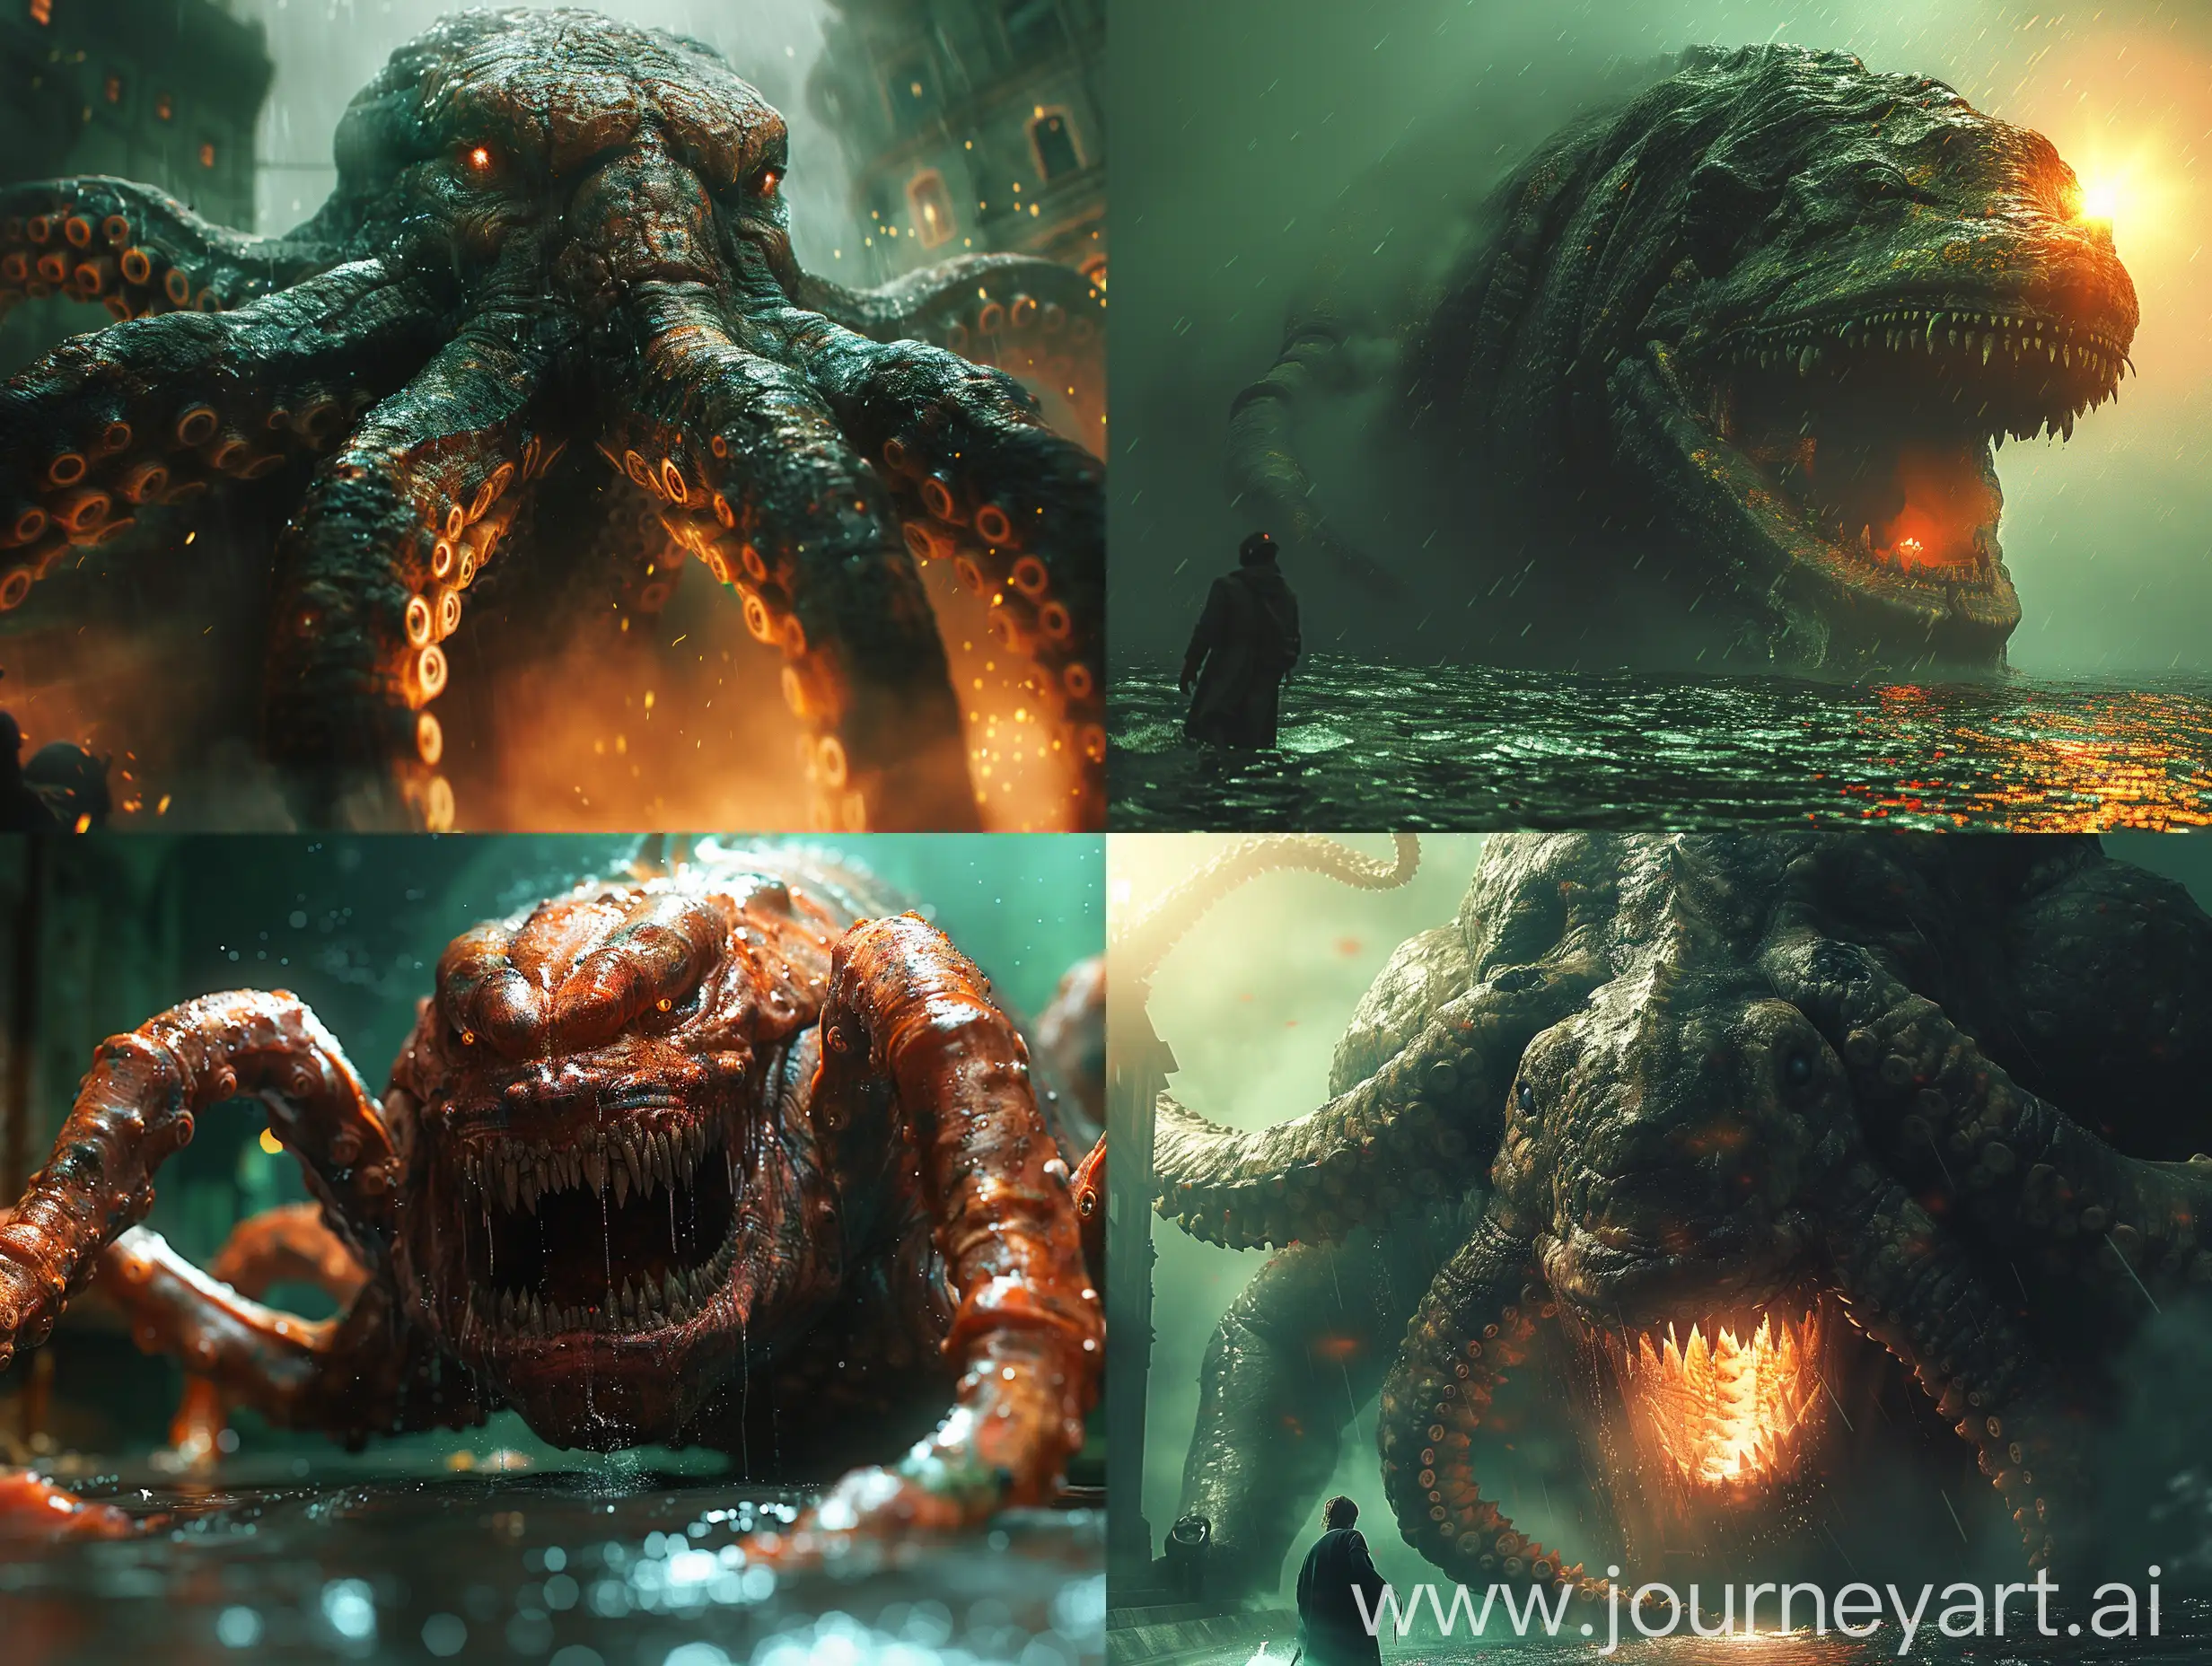 Cinematic-Realism-Film-Still-Underwater-Attack-by-Ominous-Kraken-Merfolk